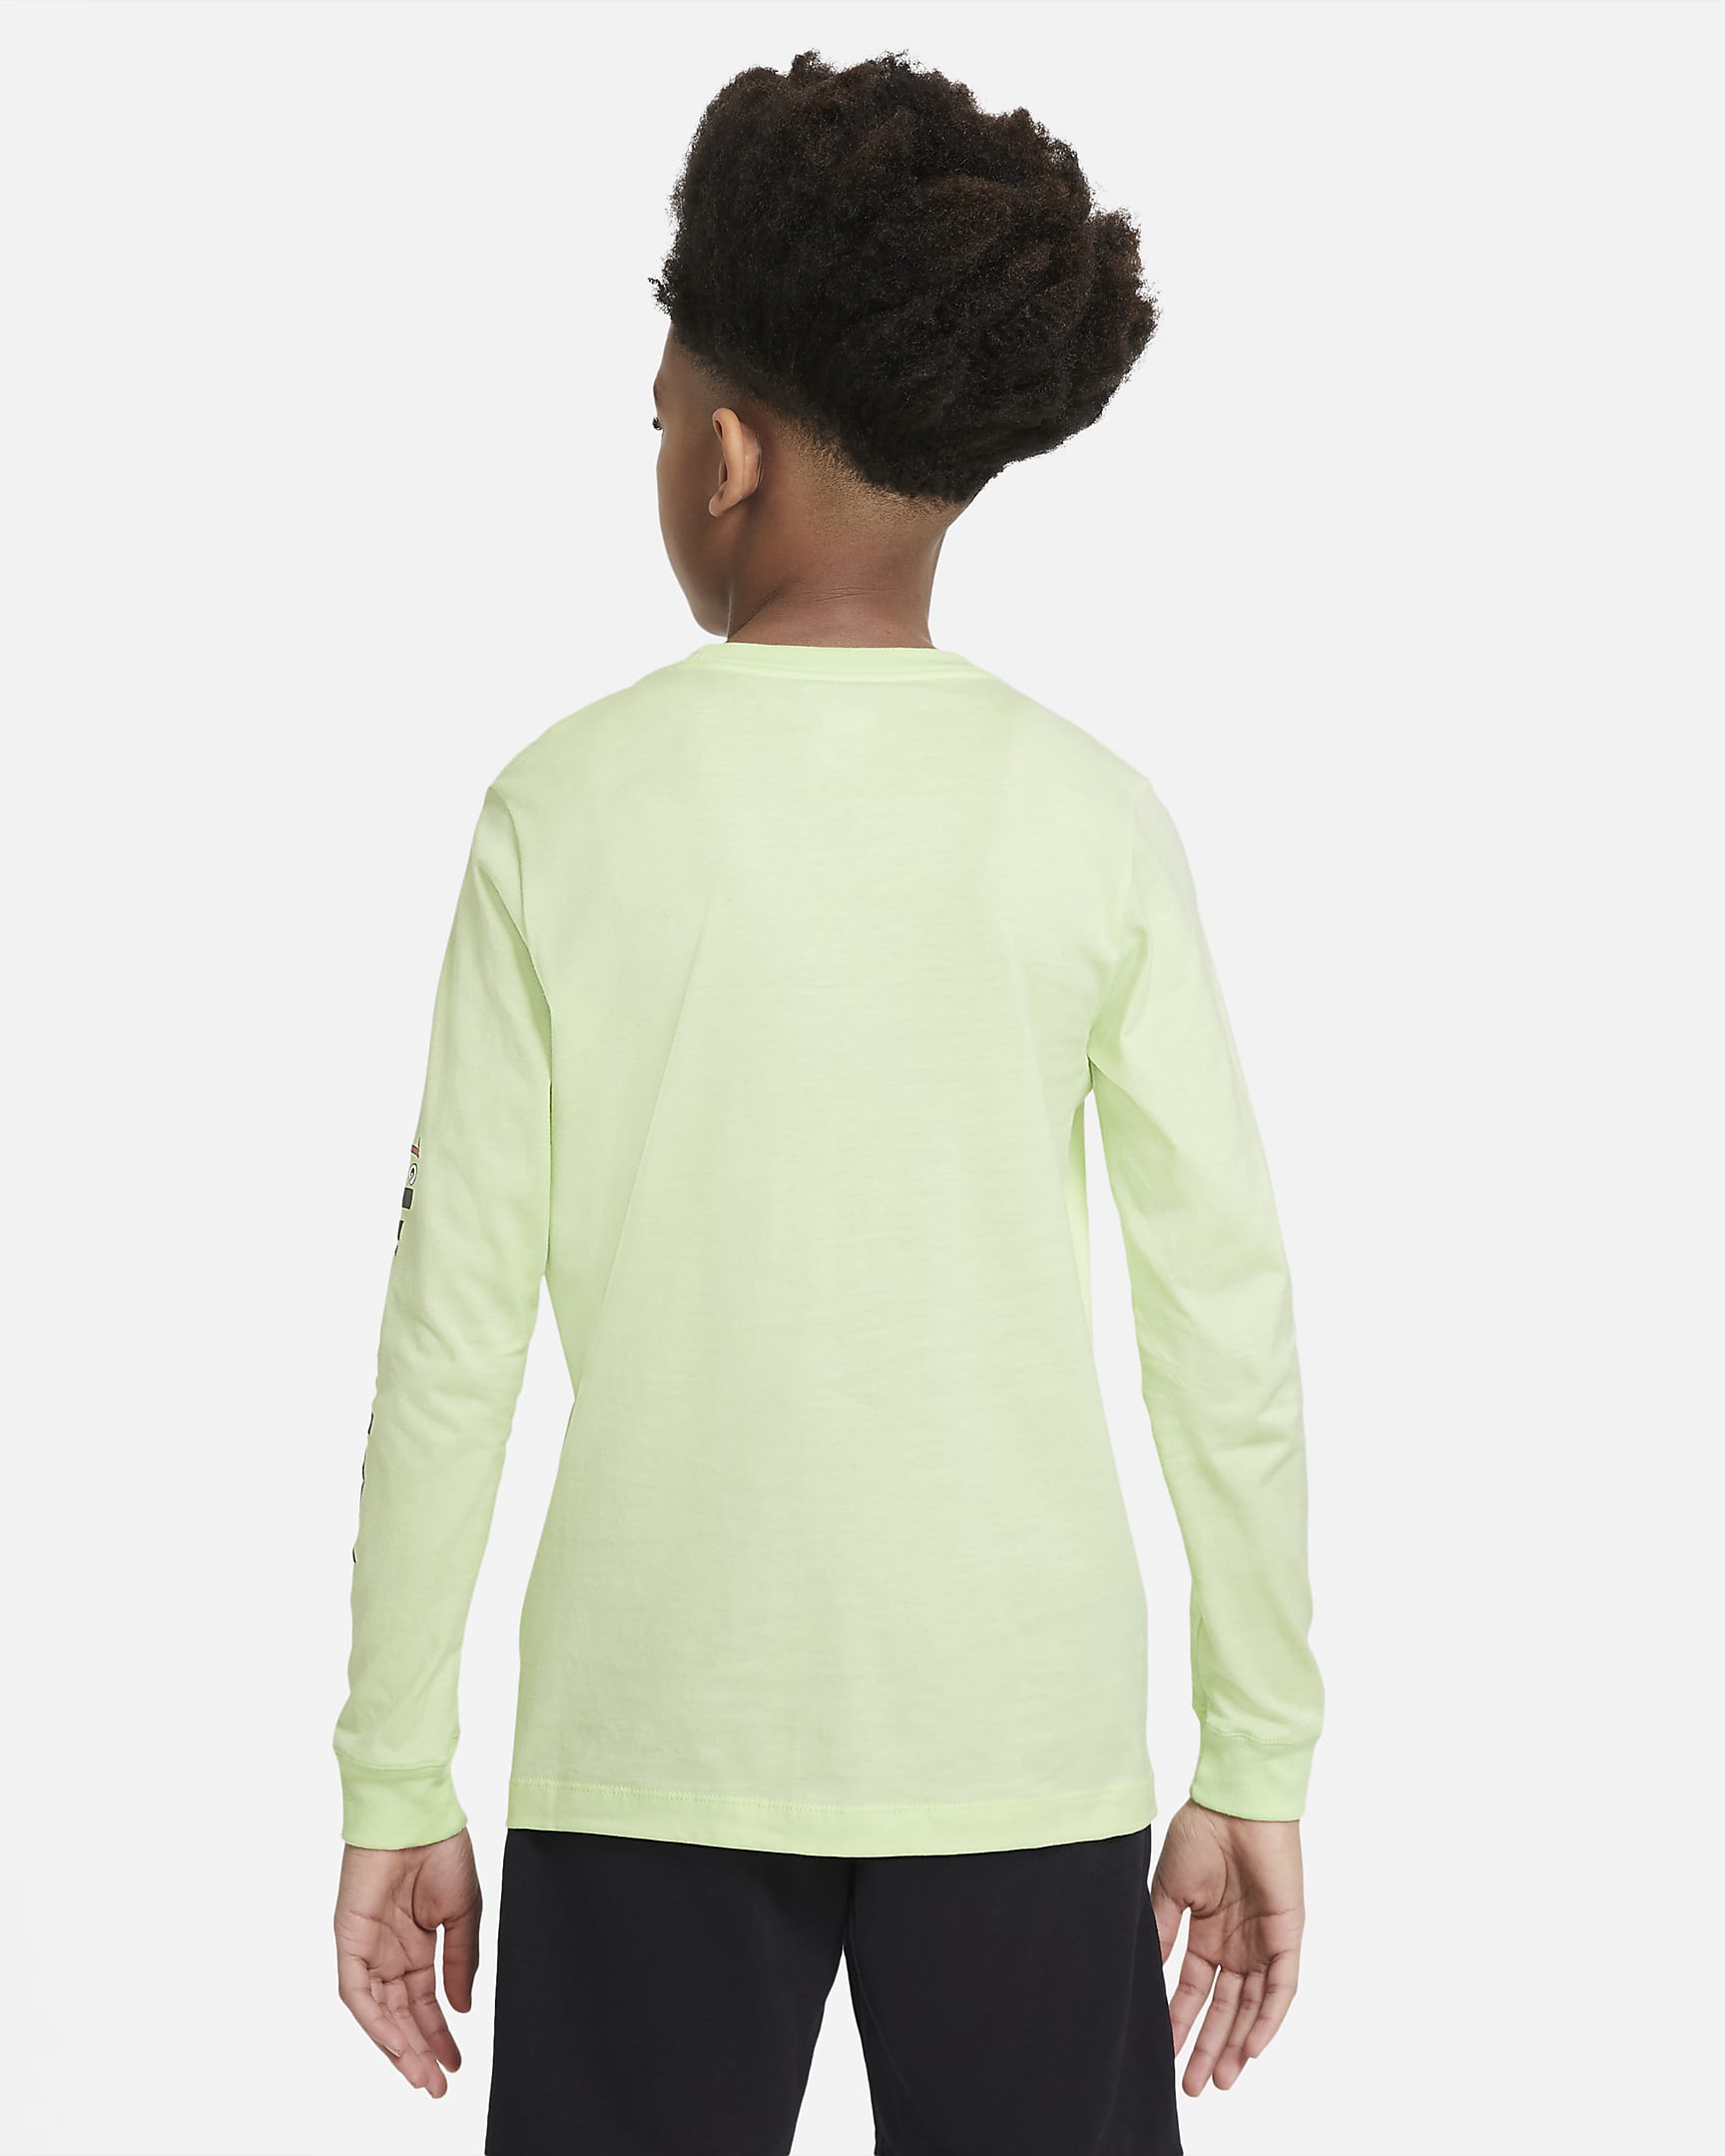 Nike Sportswear Big Kids' (Boys') Long-Sleeve T-Shirt. Nike.com